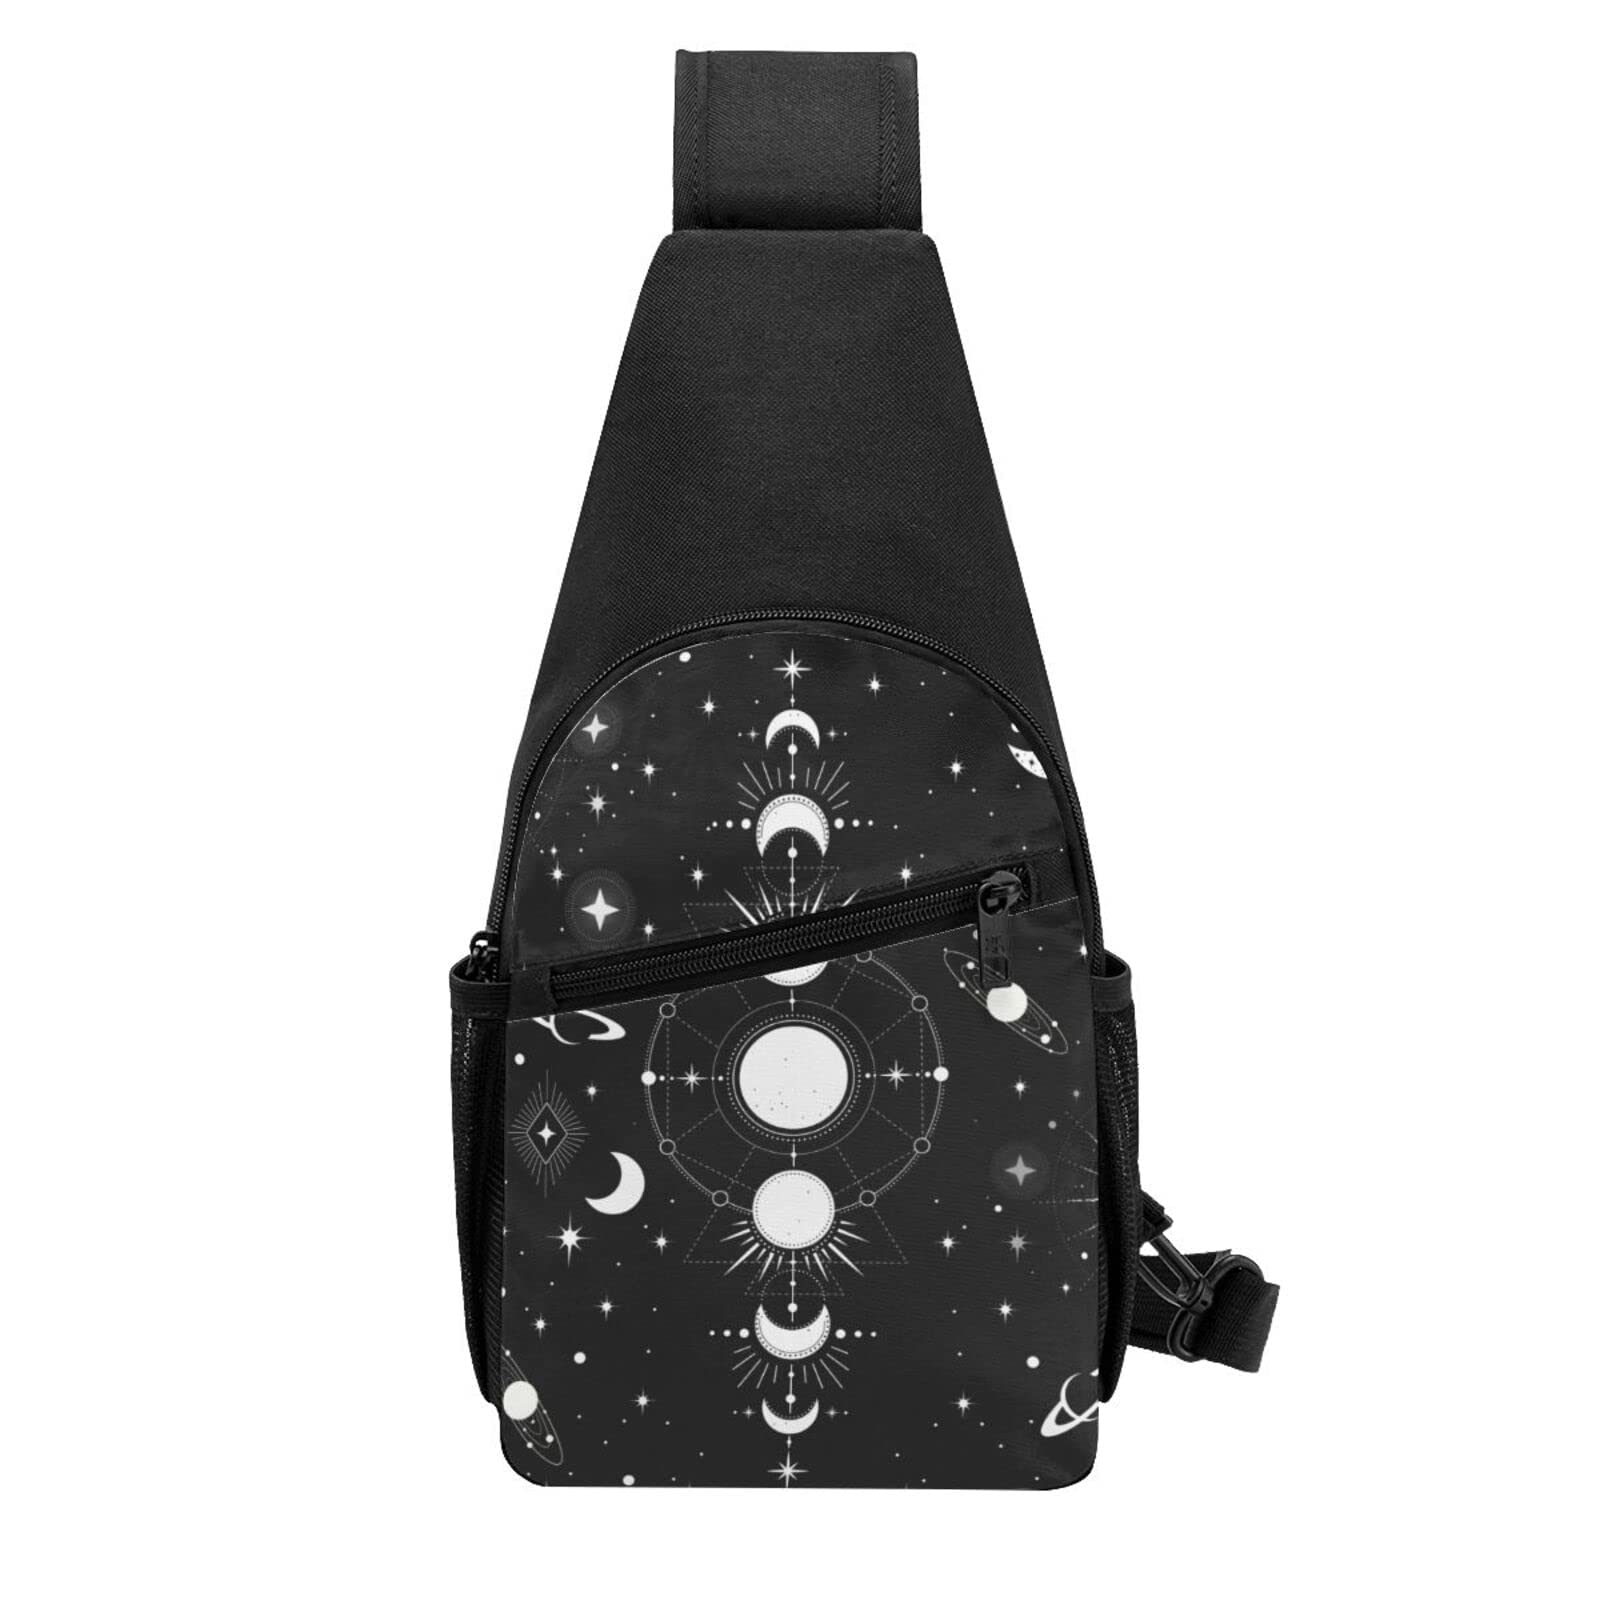 FREEHOTU Sun And Moon Mystical Astrology Sling Backpack, Travel Chest Bag Hiking Daypack Crossbody Shoulder Bag